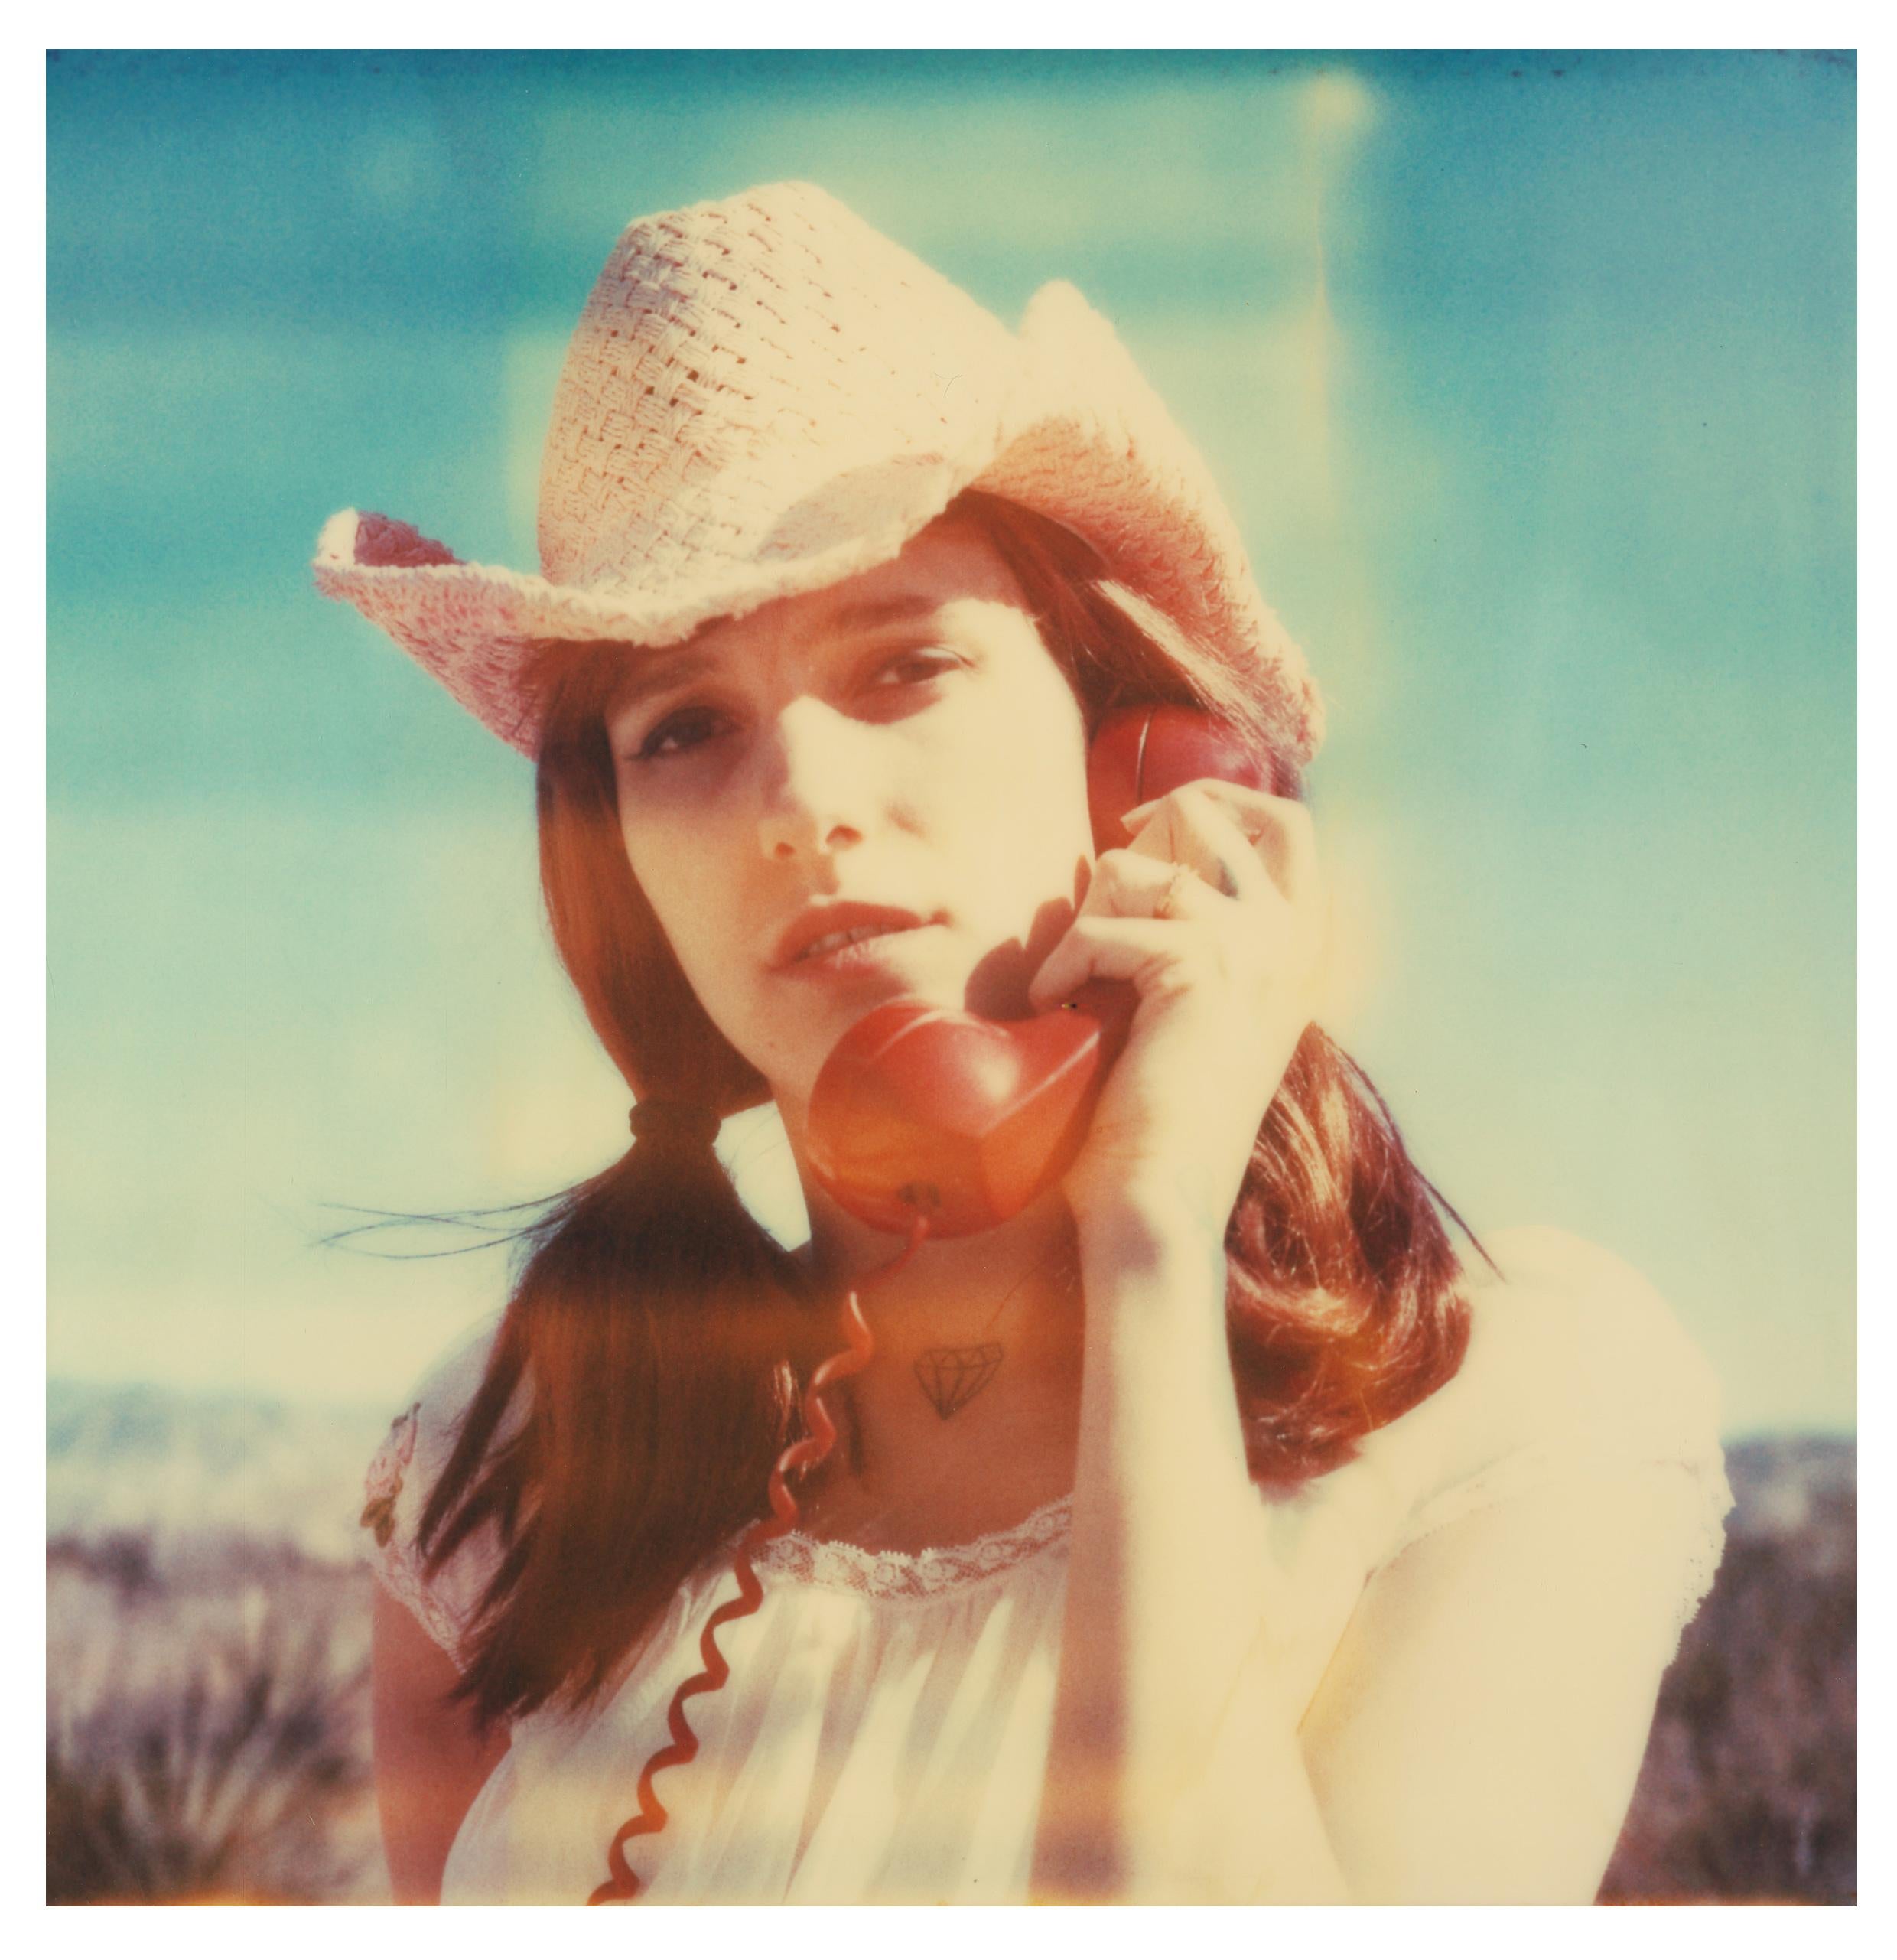 Stefanie Schneider Portrait Photograph - Her last Call (The Girl behind the White Picket Fence) - Polaroid, 21st Century